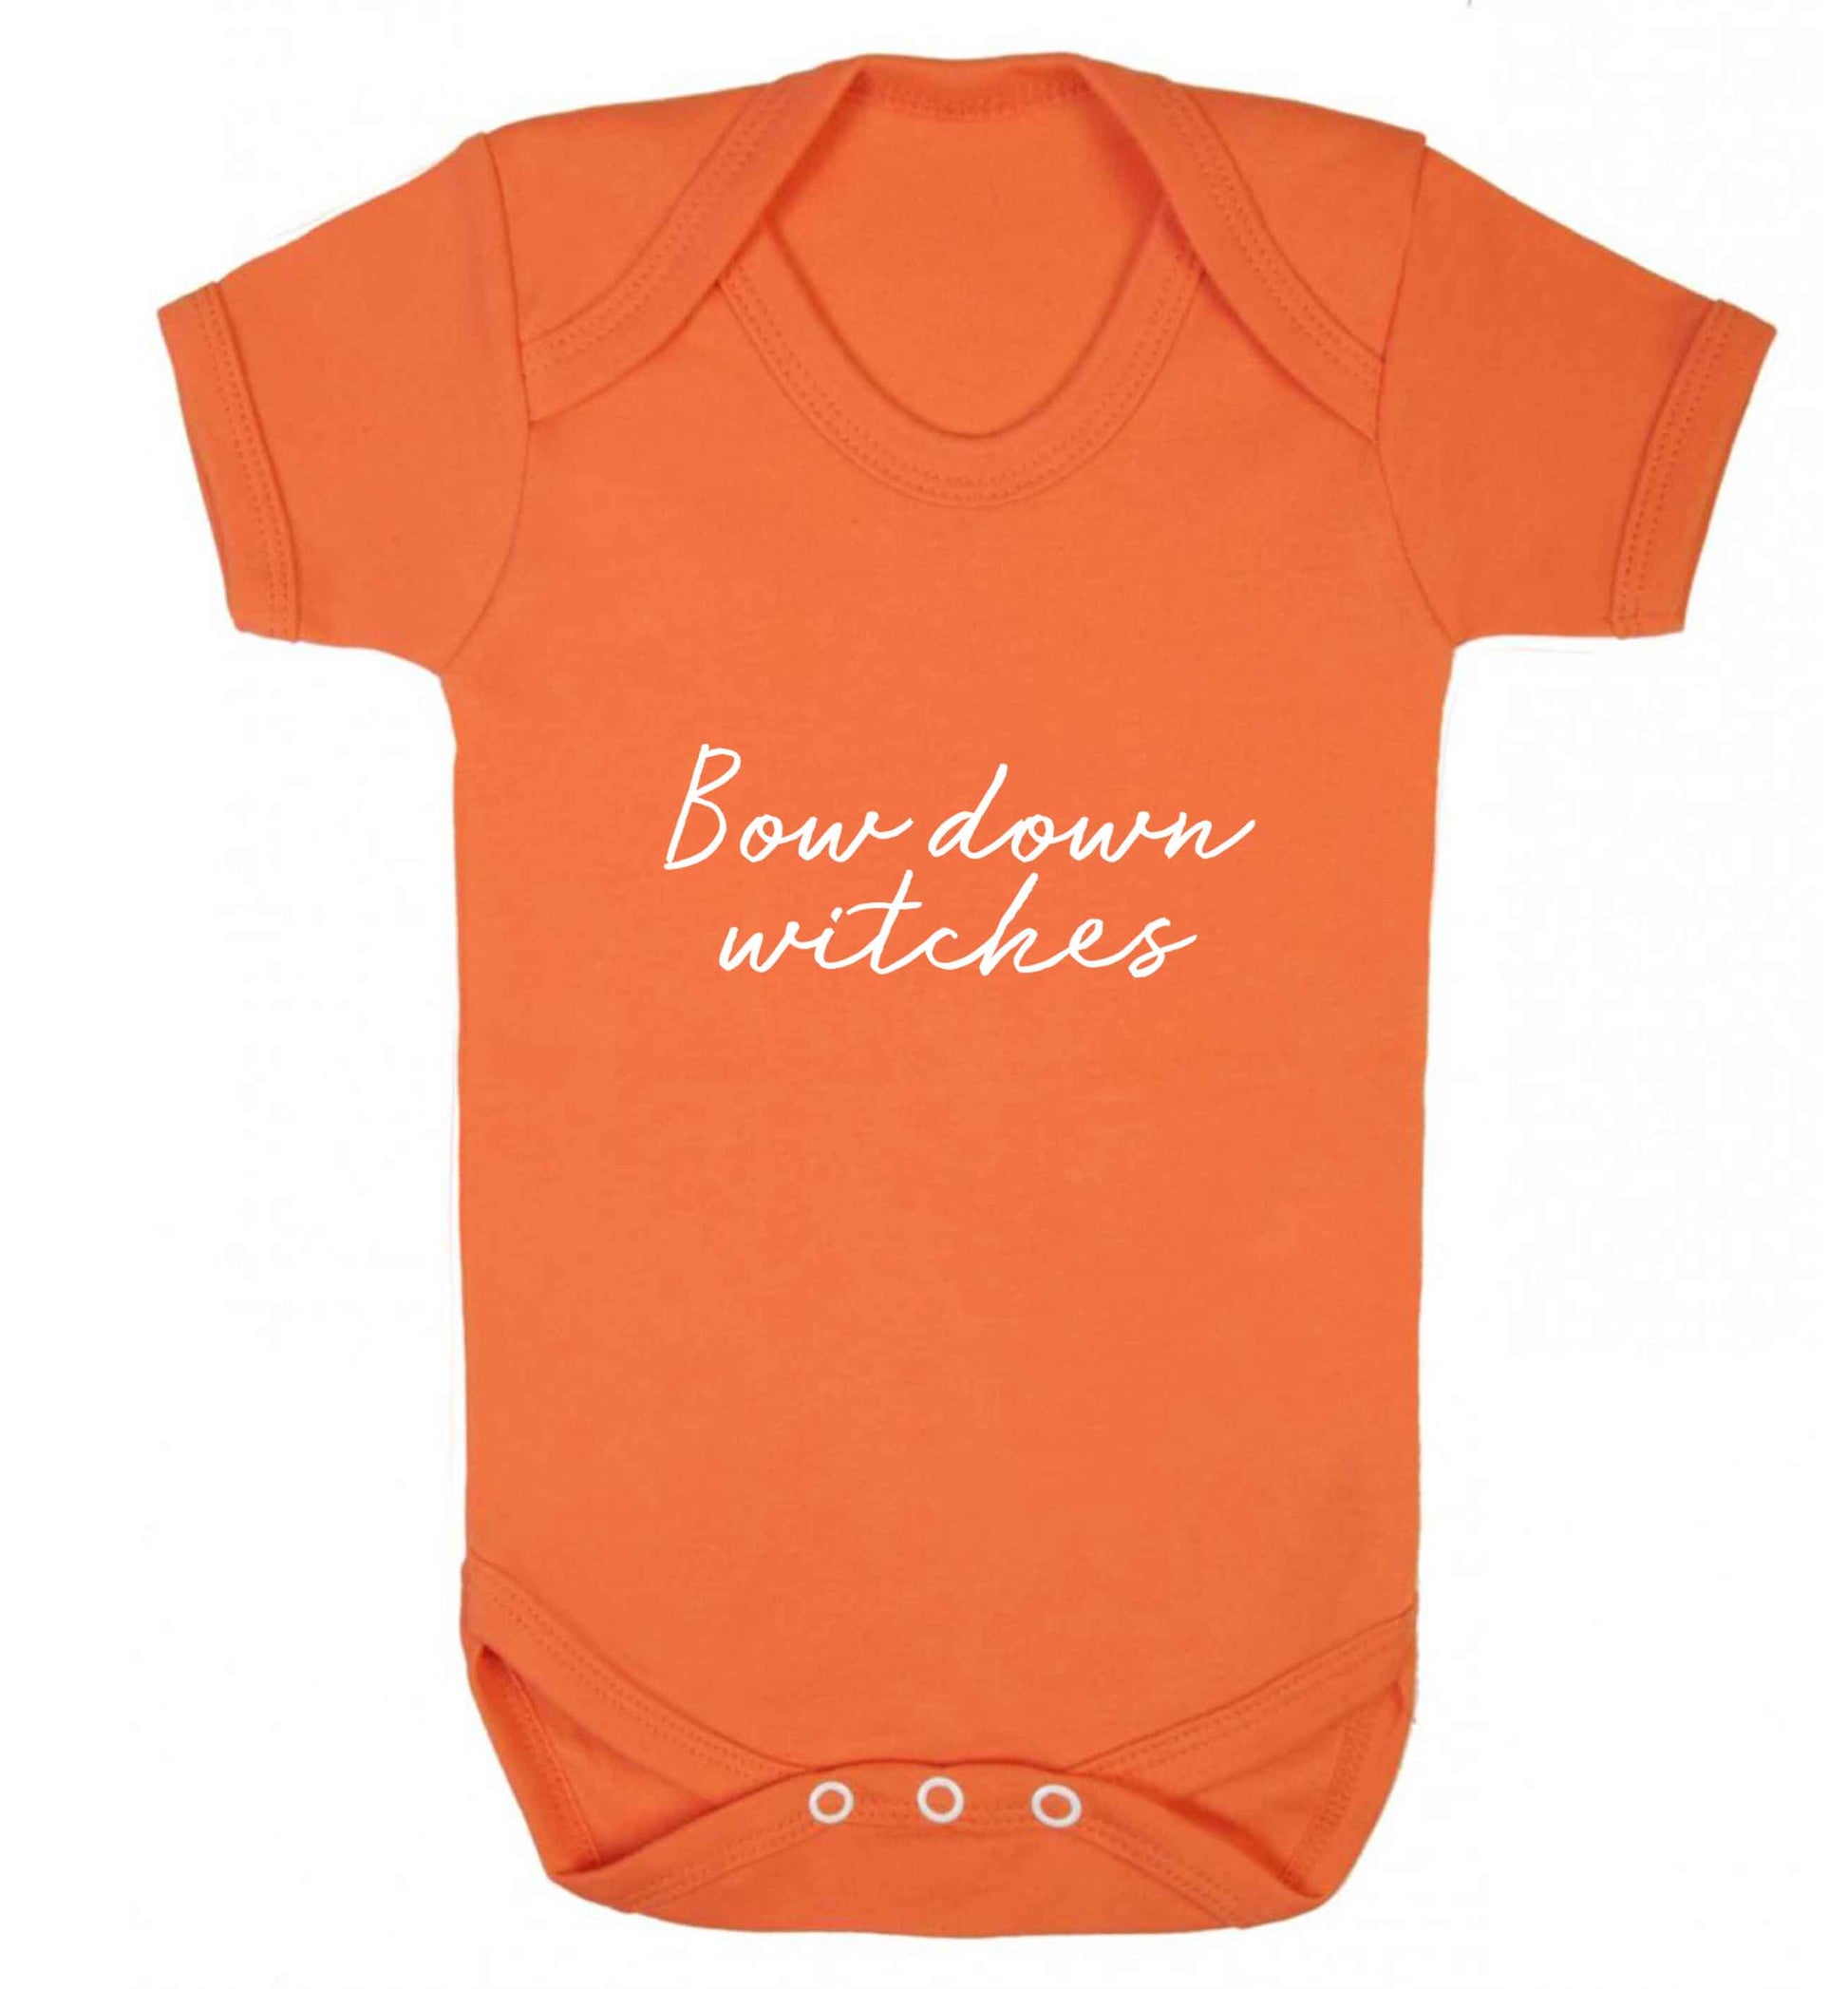 Bow down witches baby vest orange 18-24 months